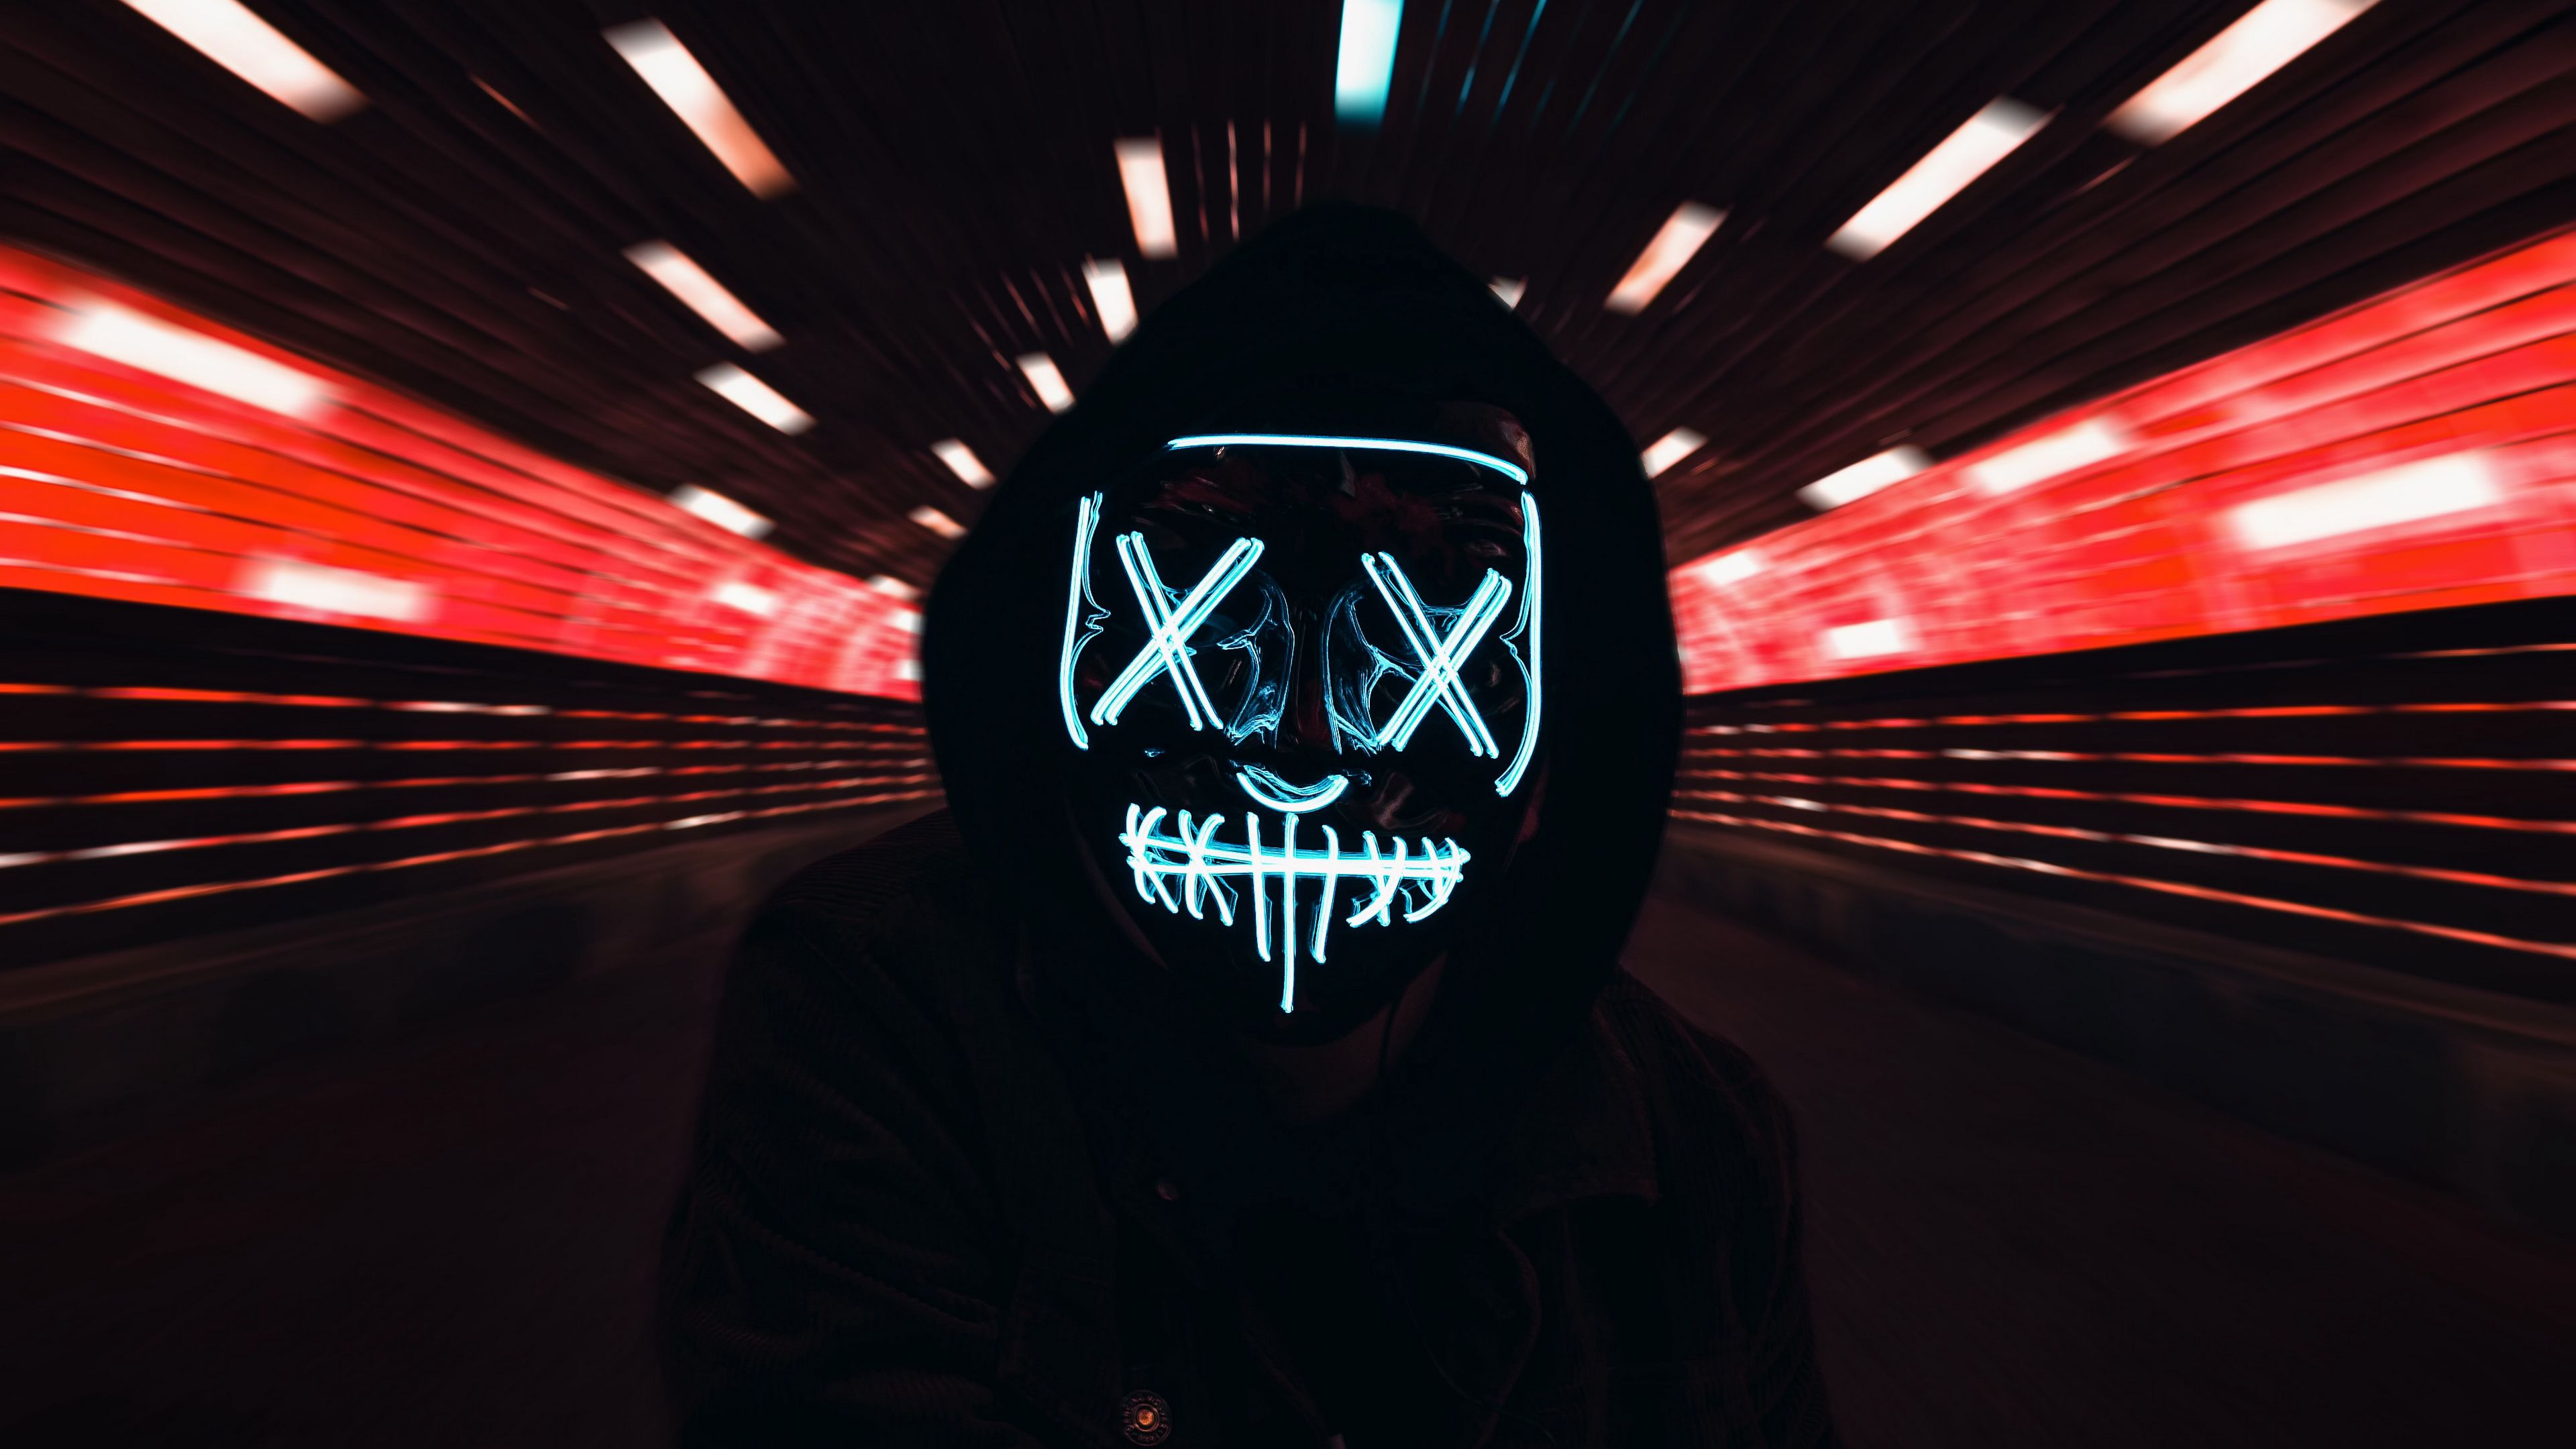 Wallpaper id mask neon hood light movement k free download